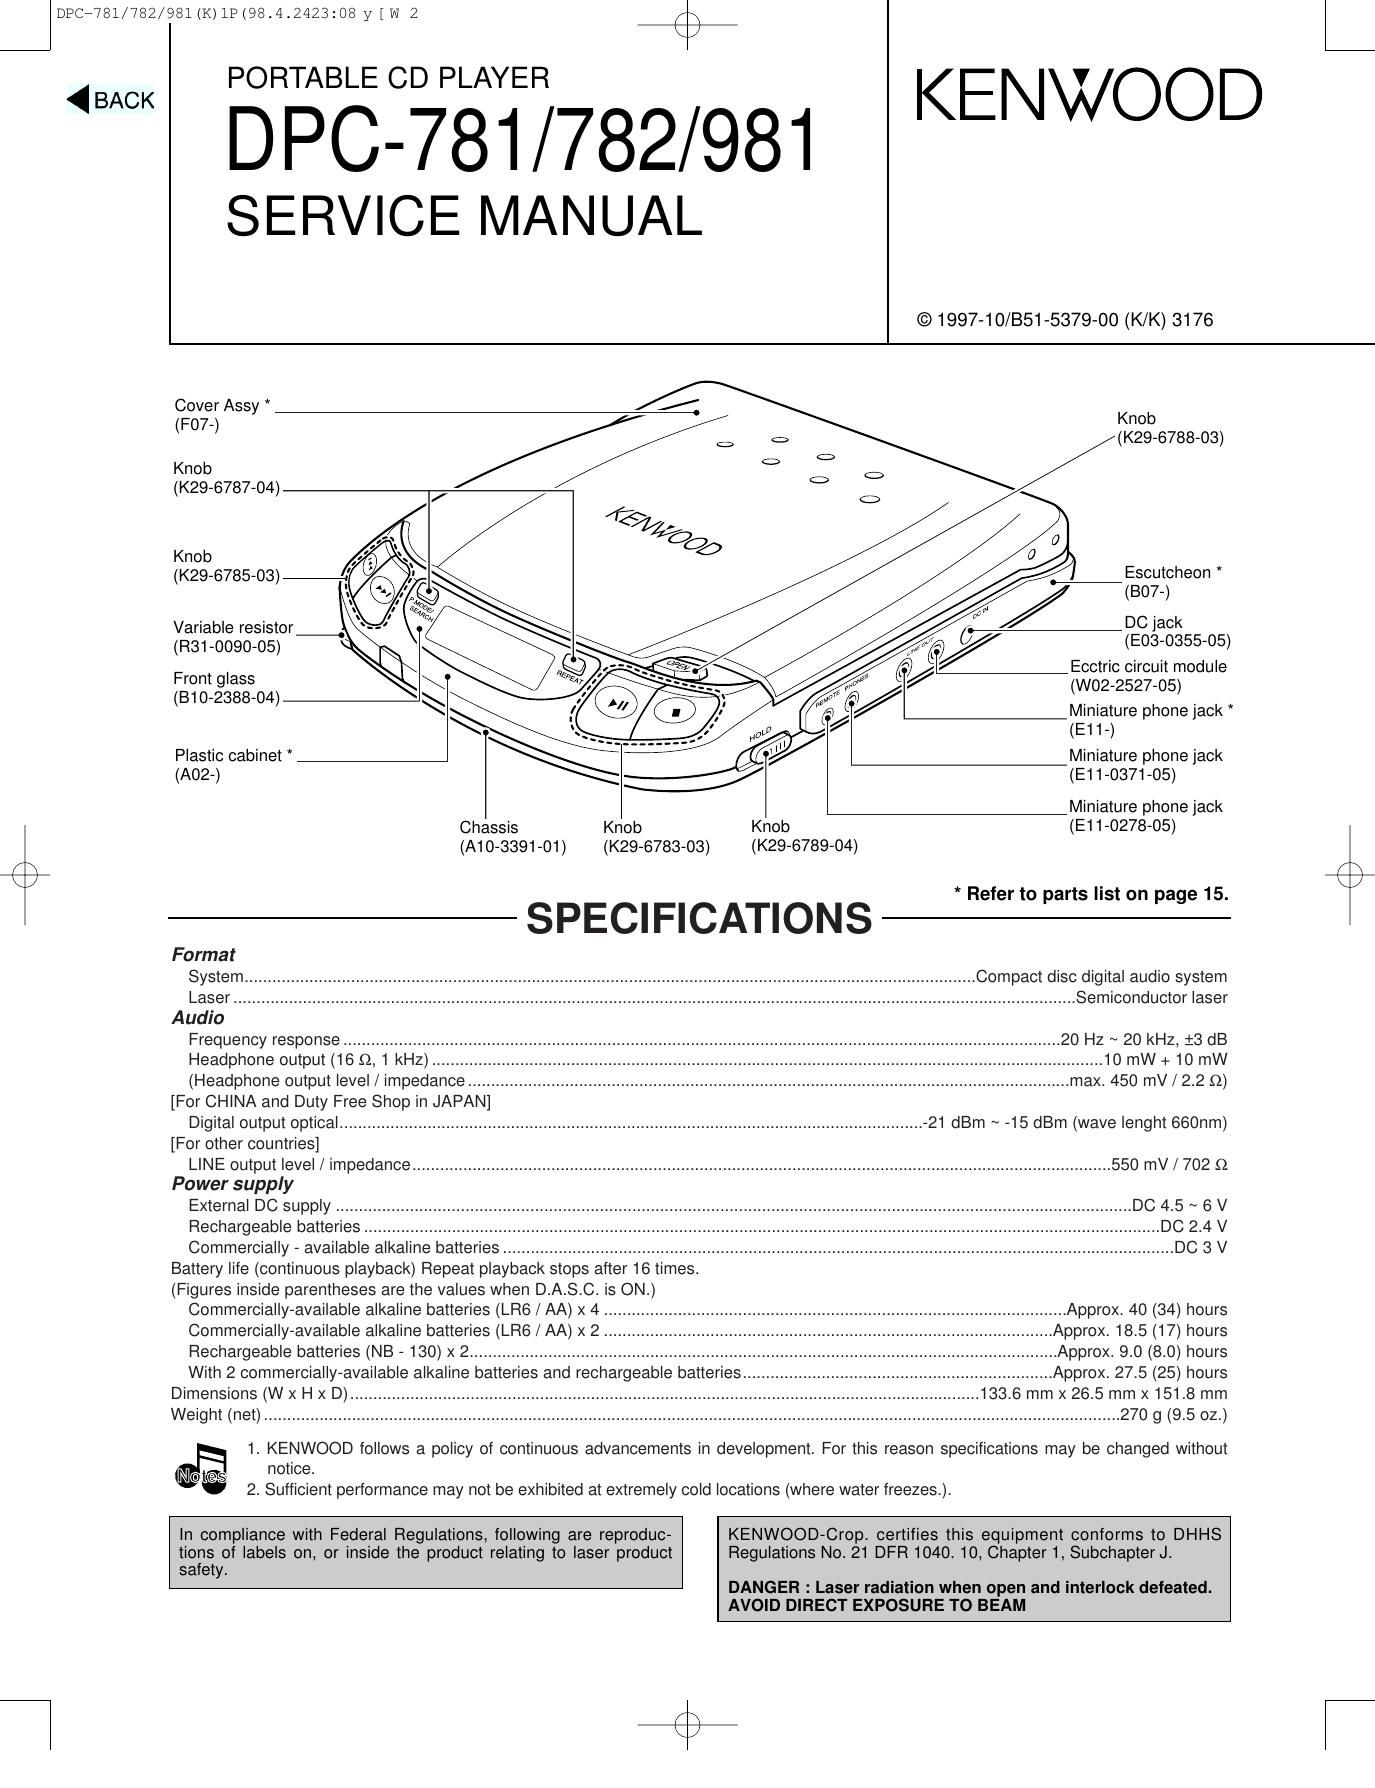 Kenwood DPC 782 Service Manual